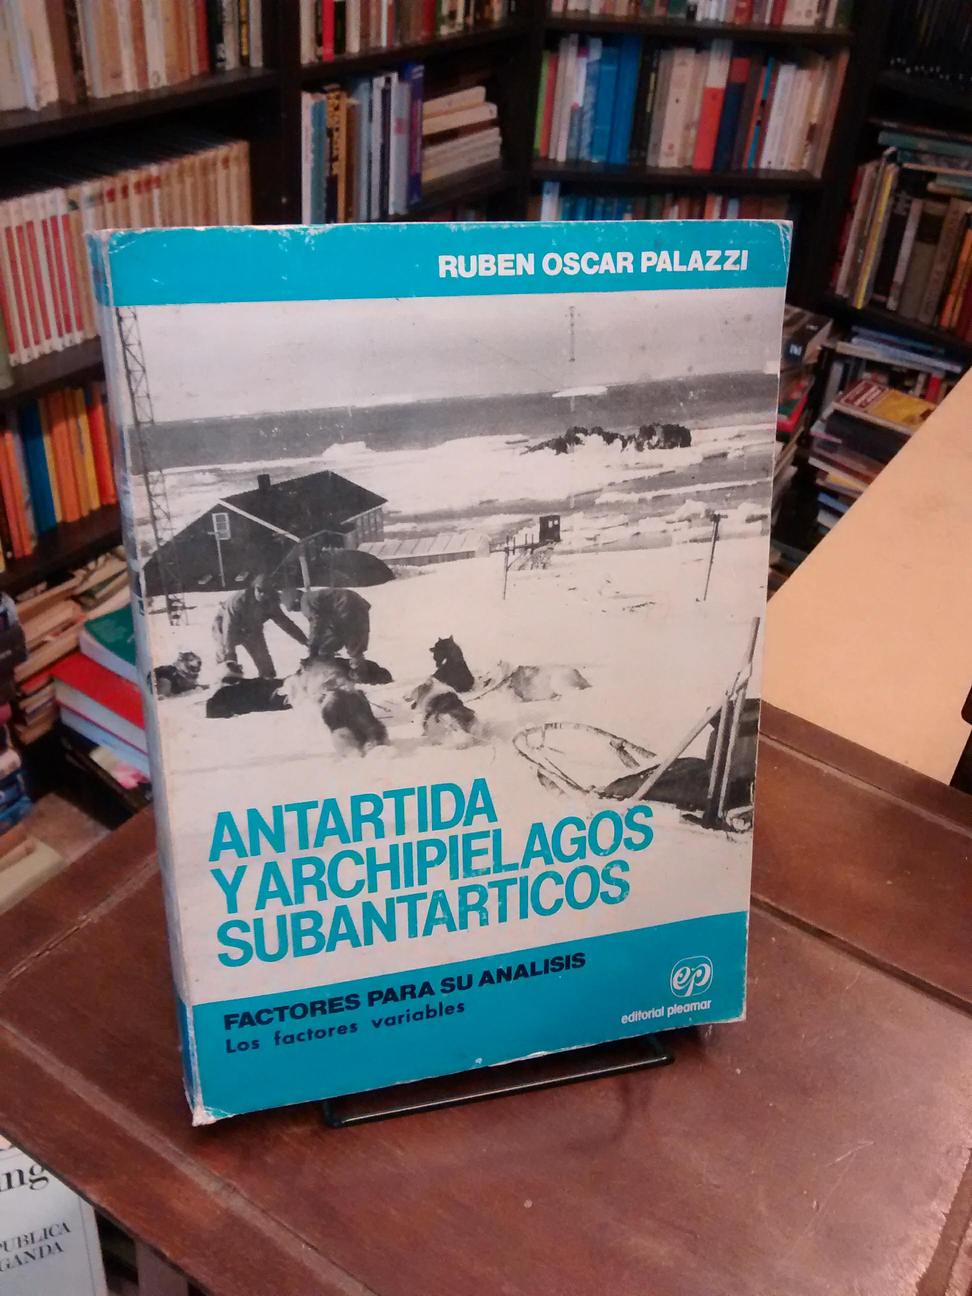 Antártida y archipiélagos subantárticos (Tomo 2) - Rubén Oscar Palazzi